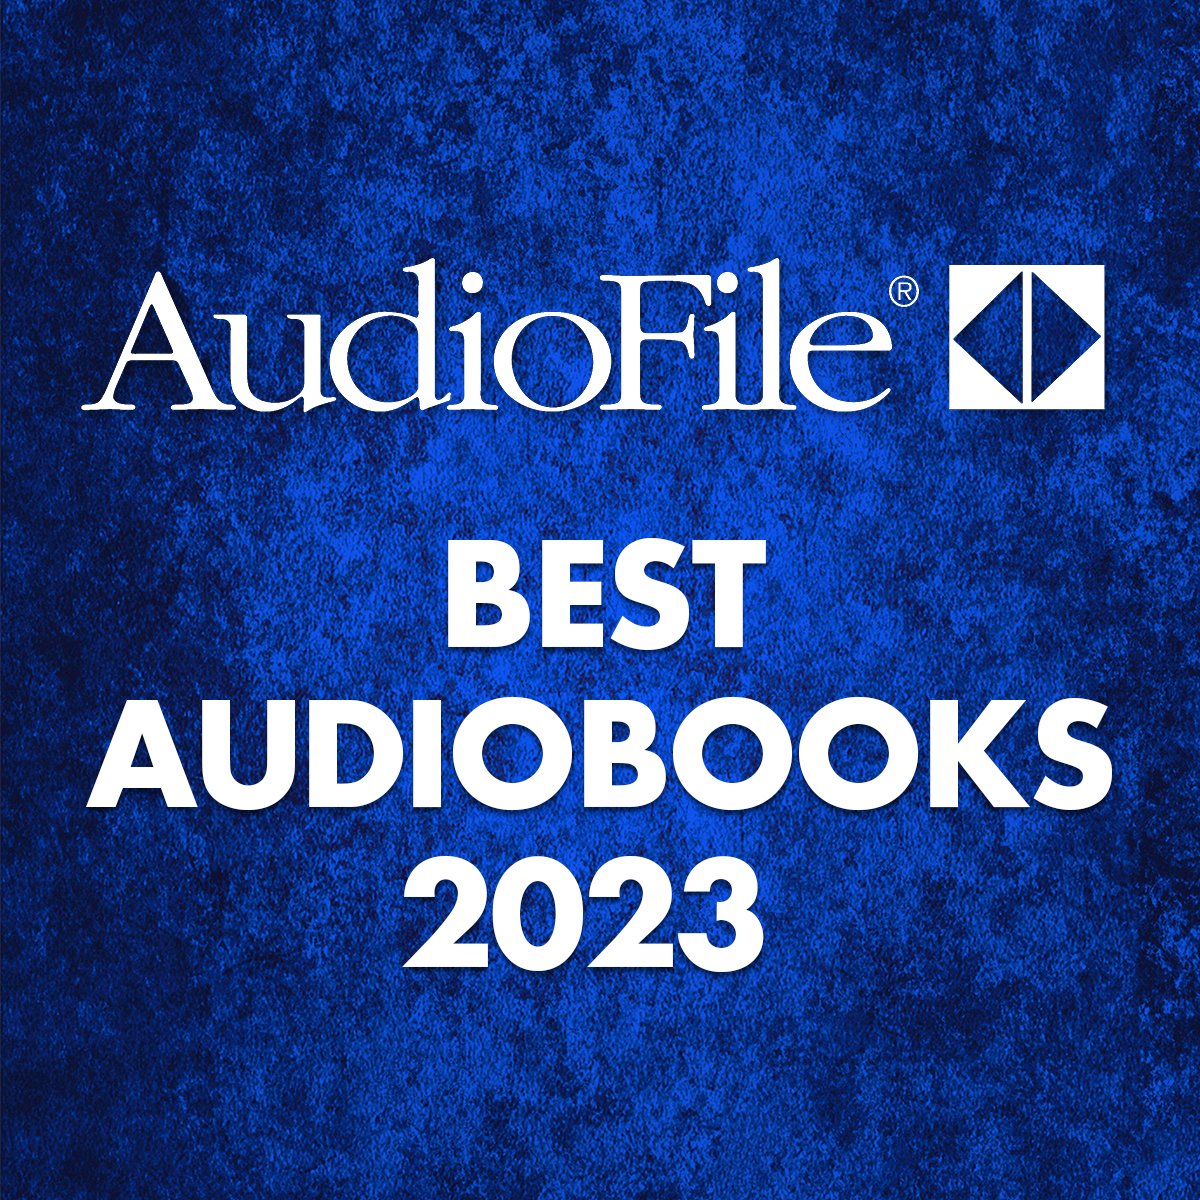 AudioFile’s 2023 Best Audiobooks!